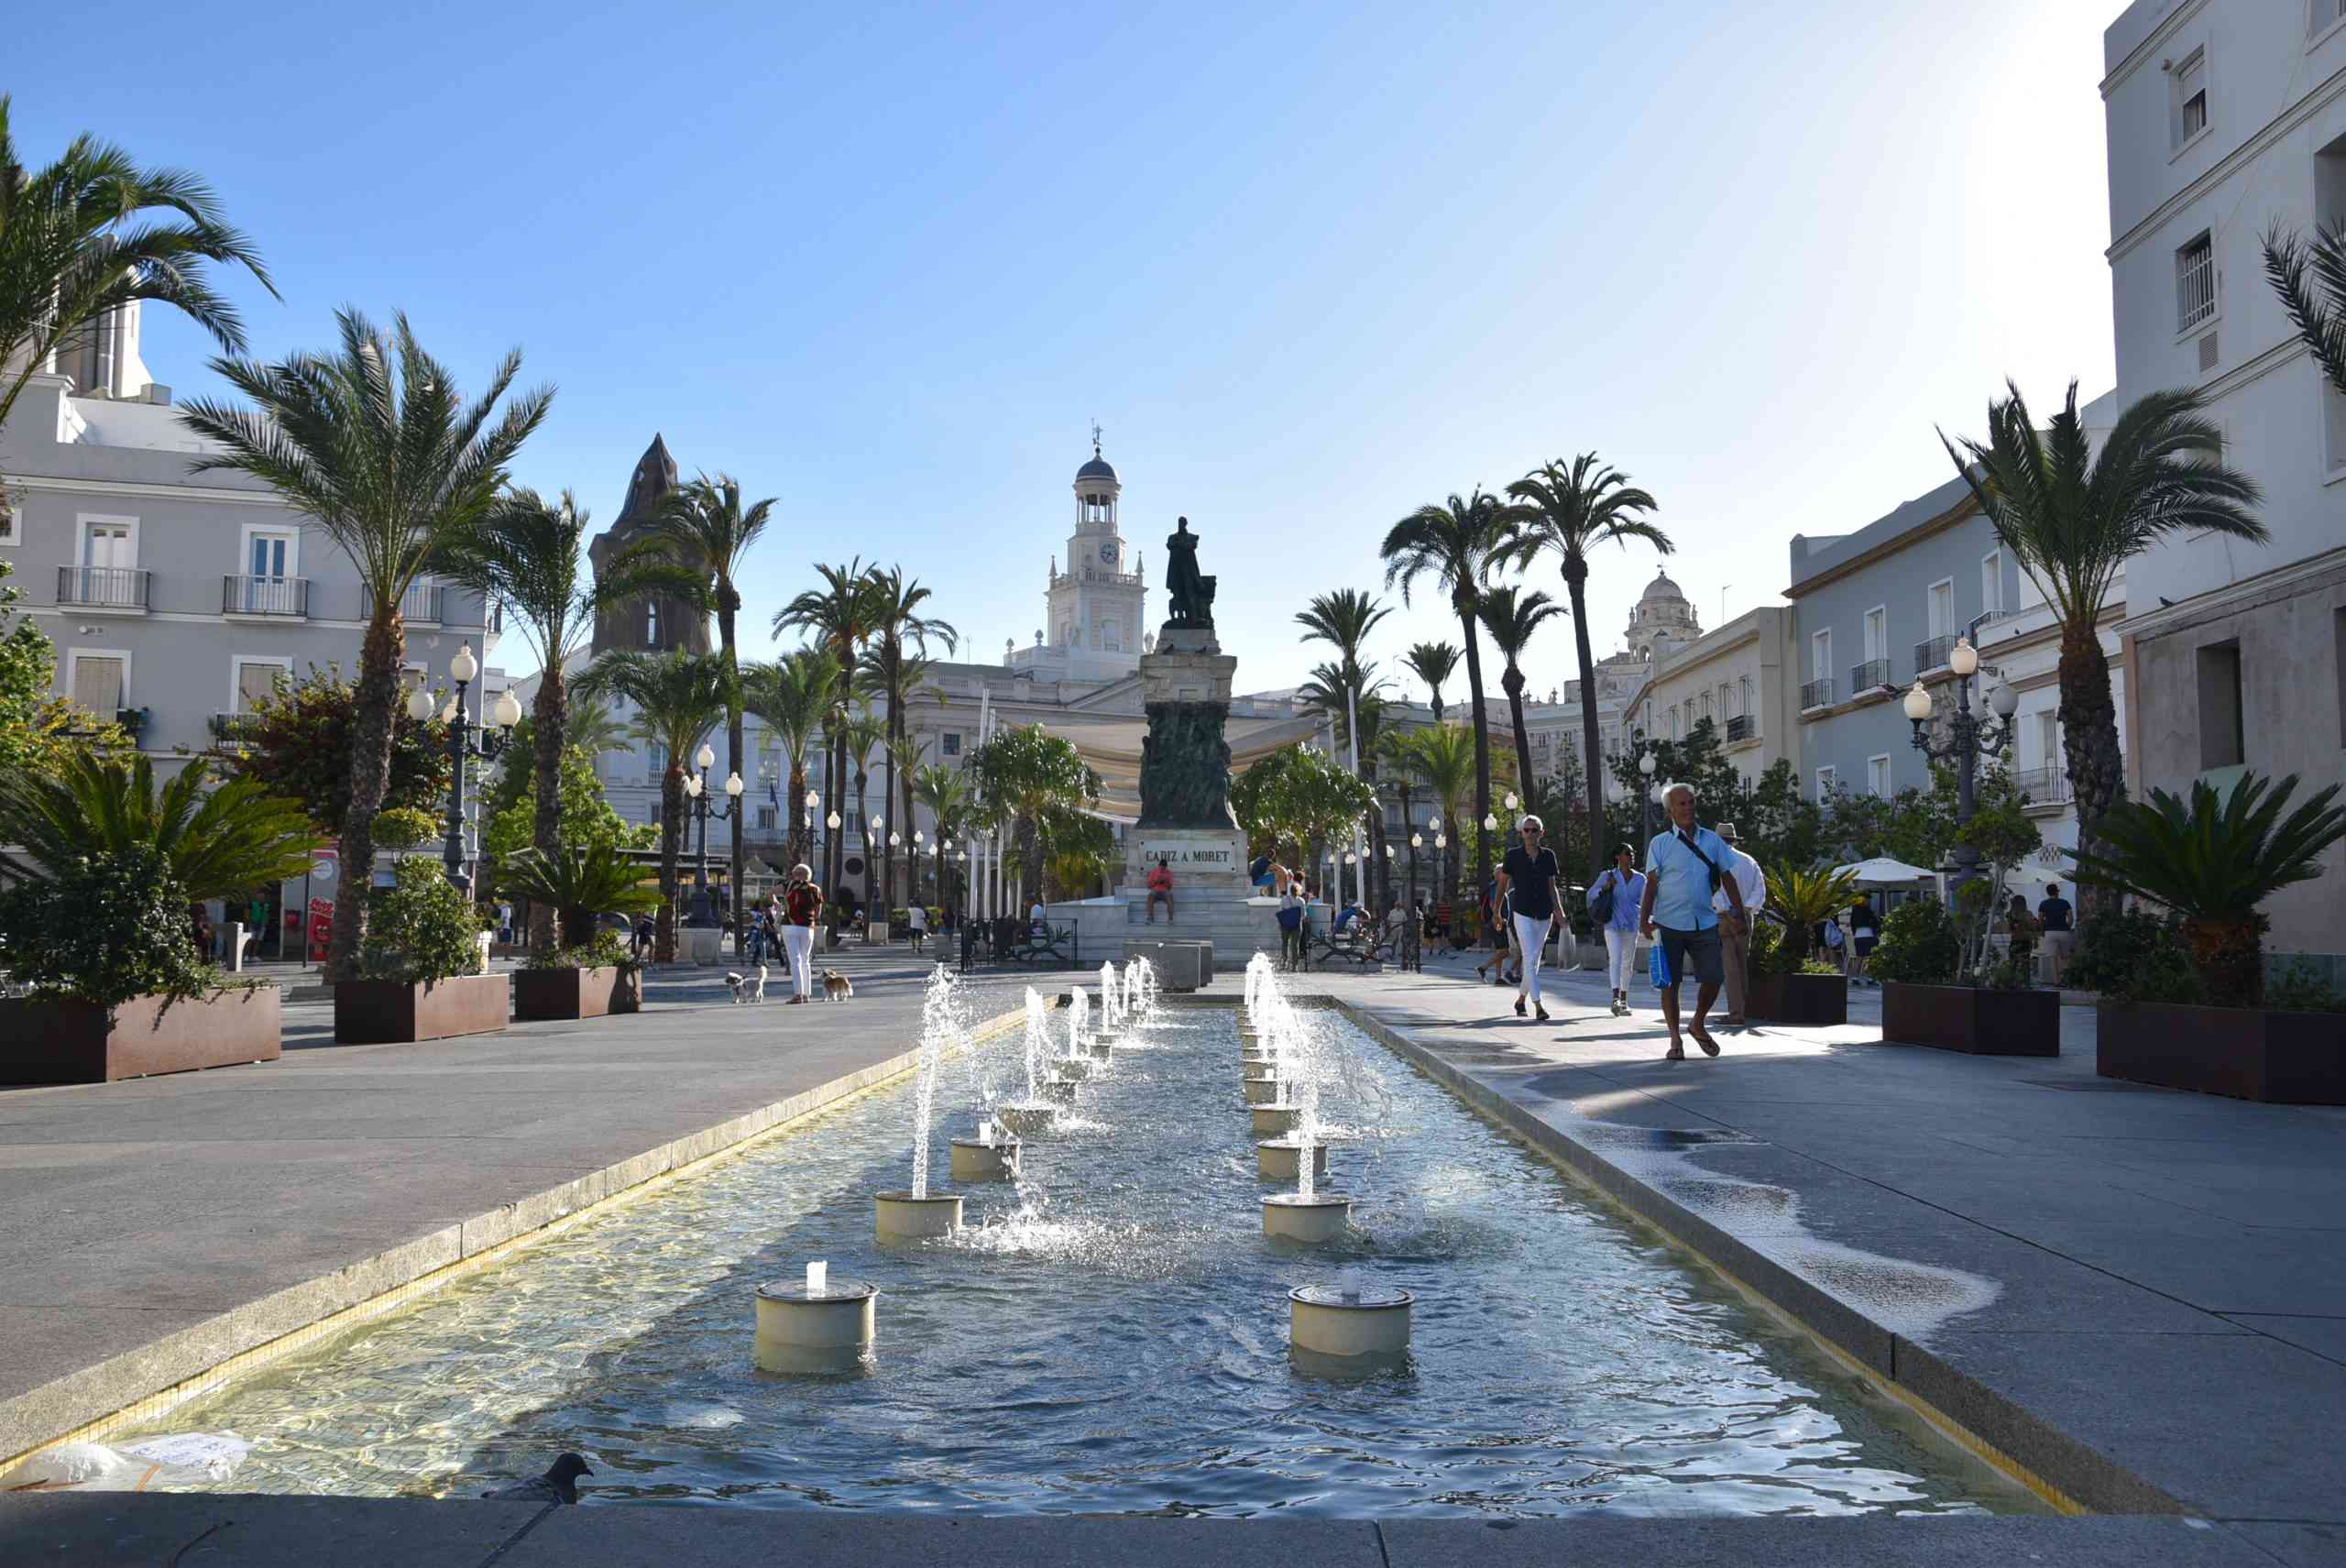 Cadiz oldest city in Western Europe